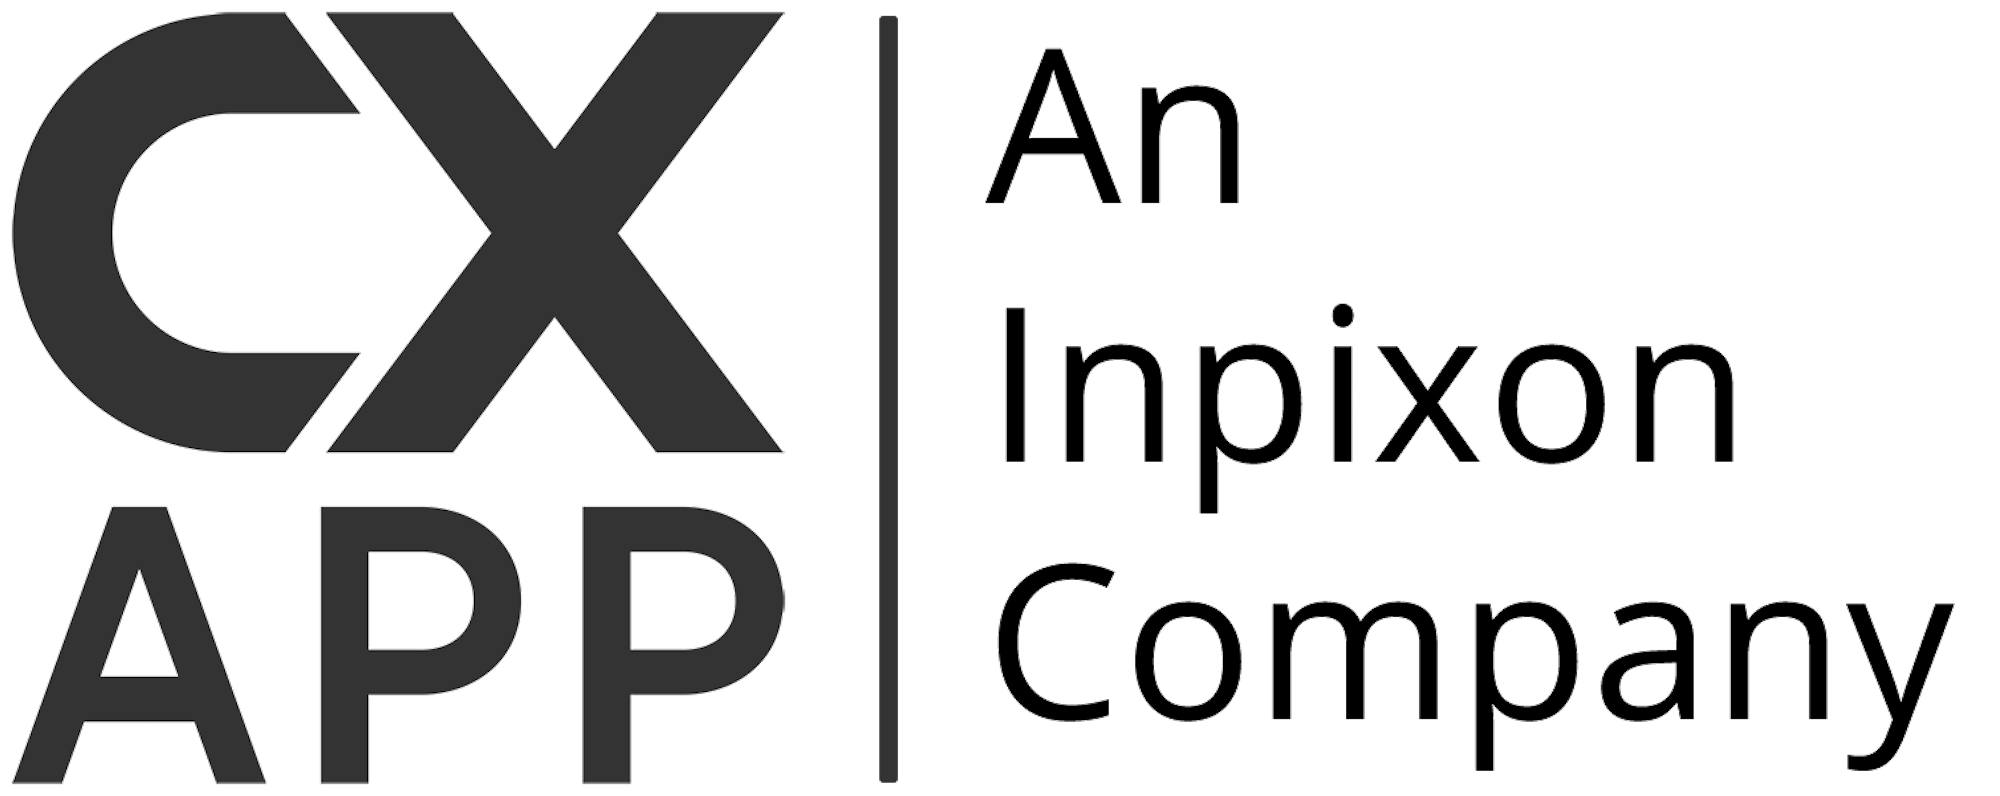 The CXApp, An Inpixon Company